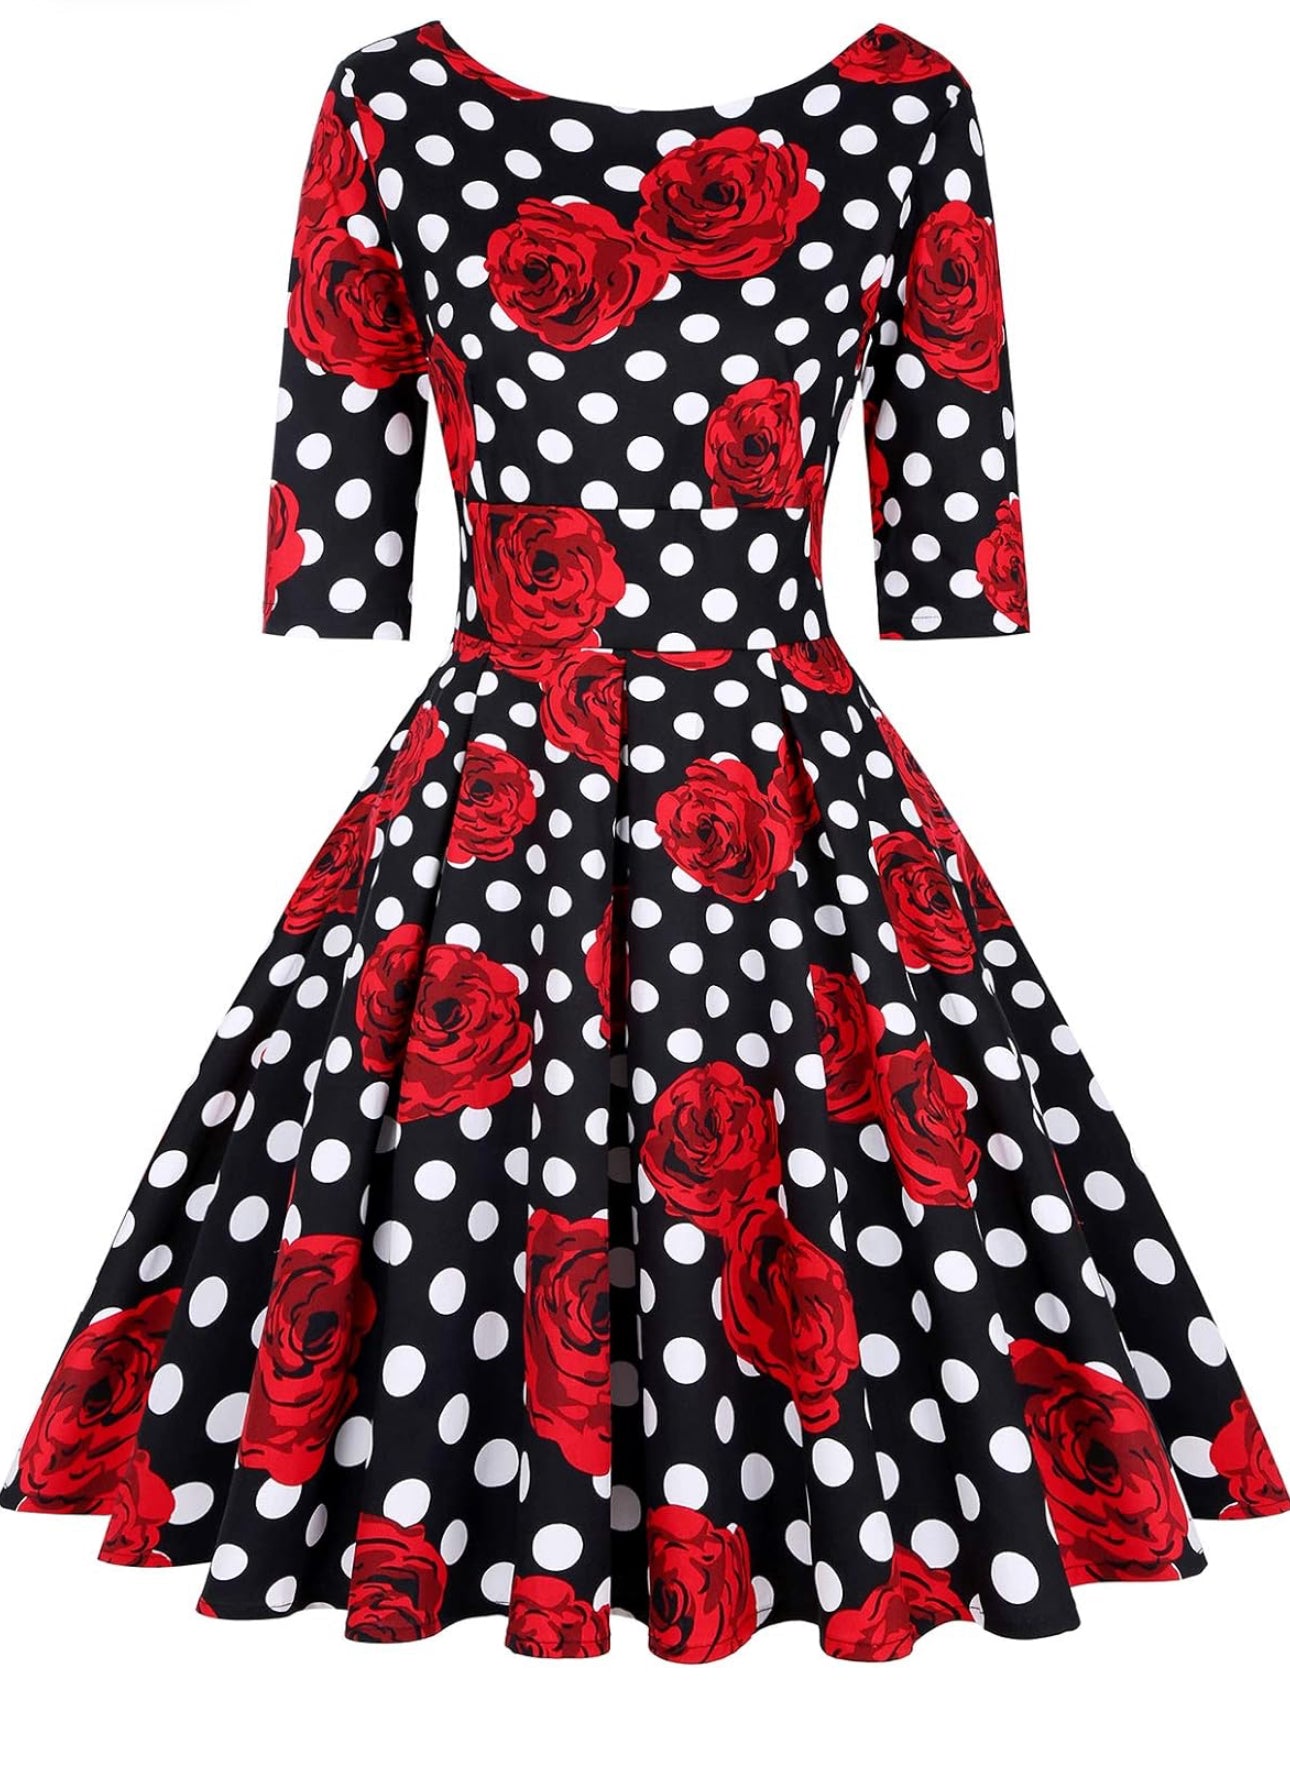 Retro Inspired Floral Polka Dot Swing Dress (US Sizes 4 - 22)